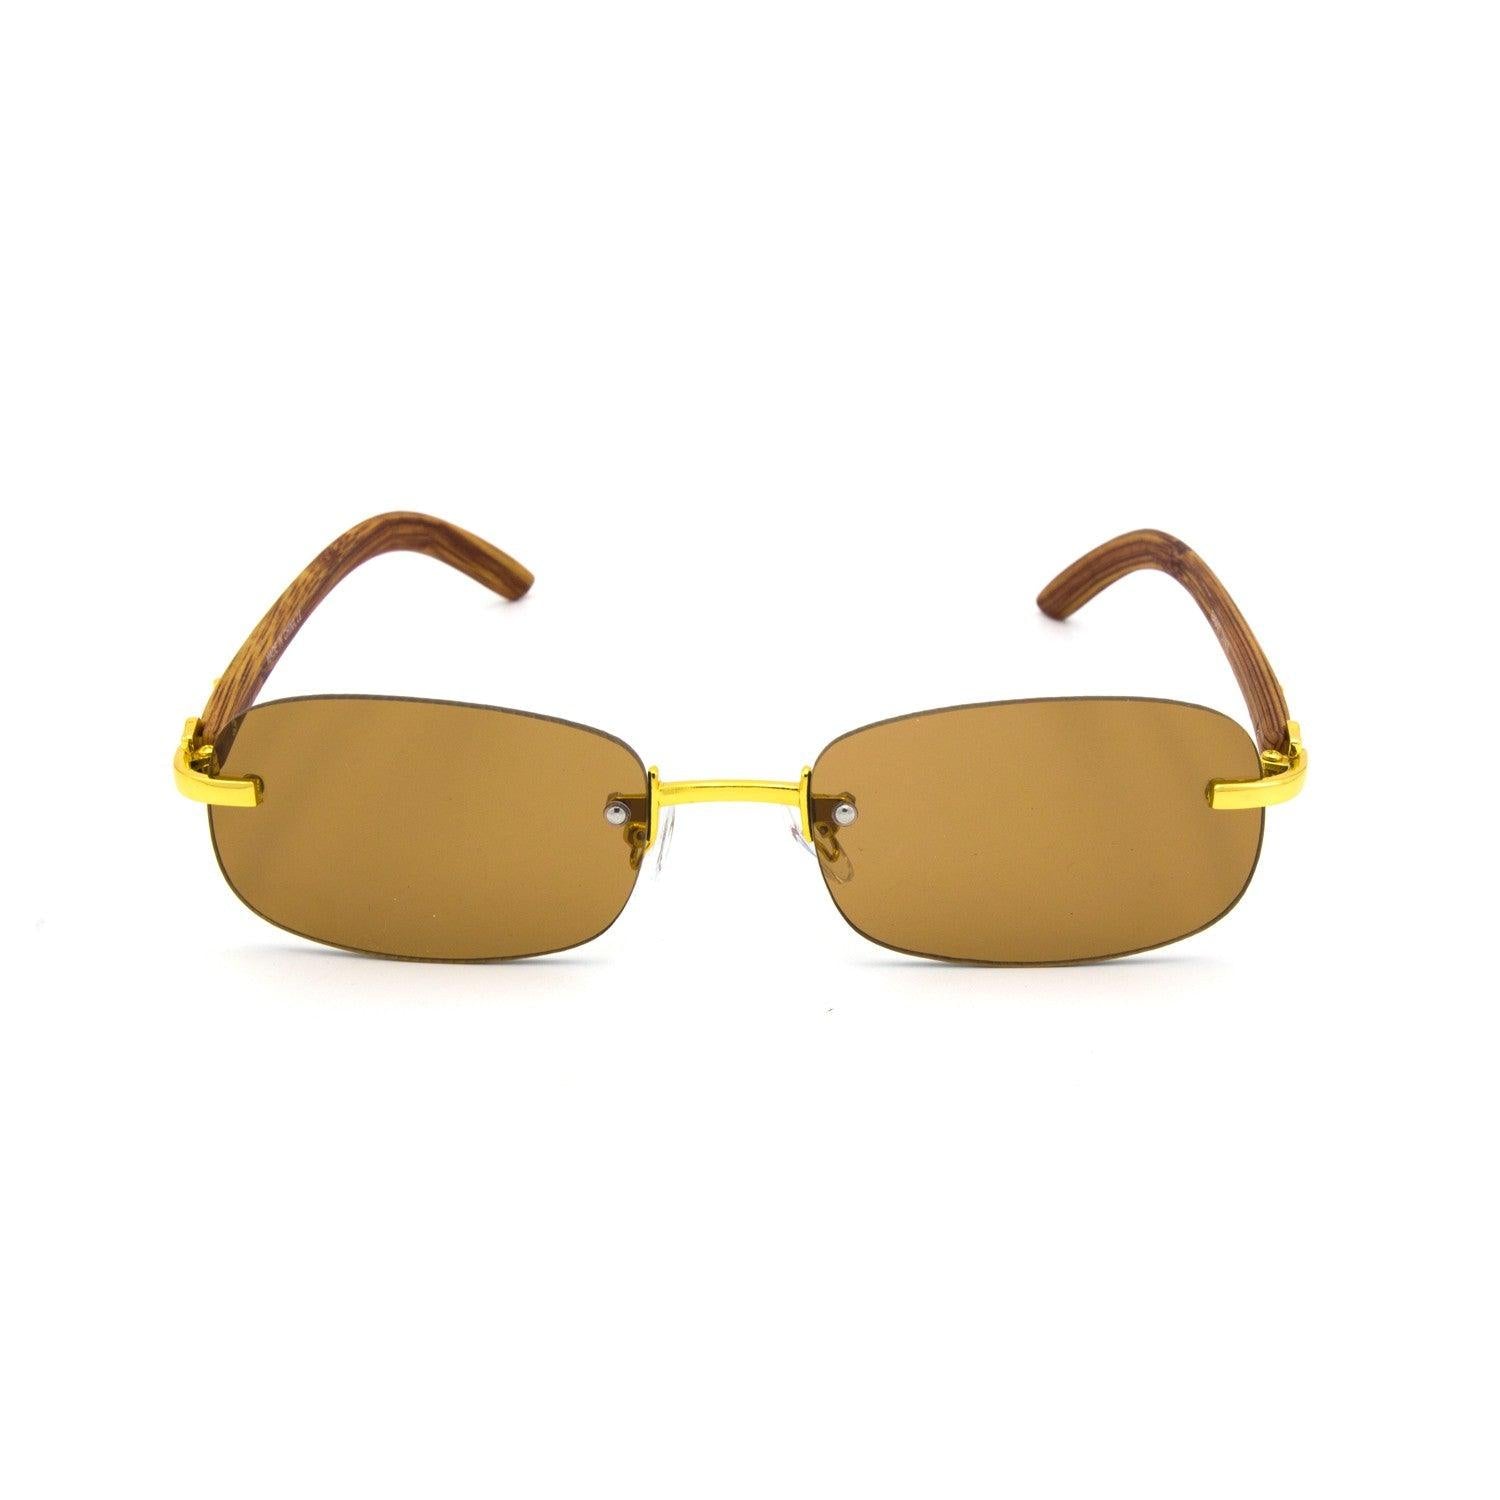 "GAME" Men's Rectangle Sunglasses - Weekend Shade Sunglasses